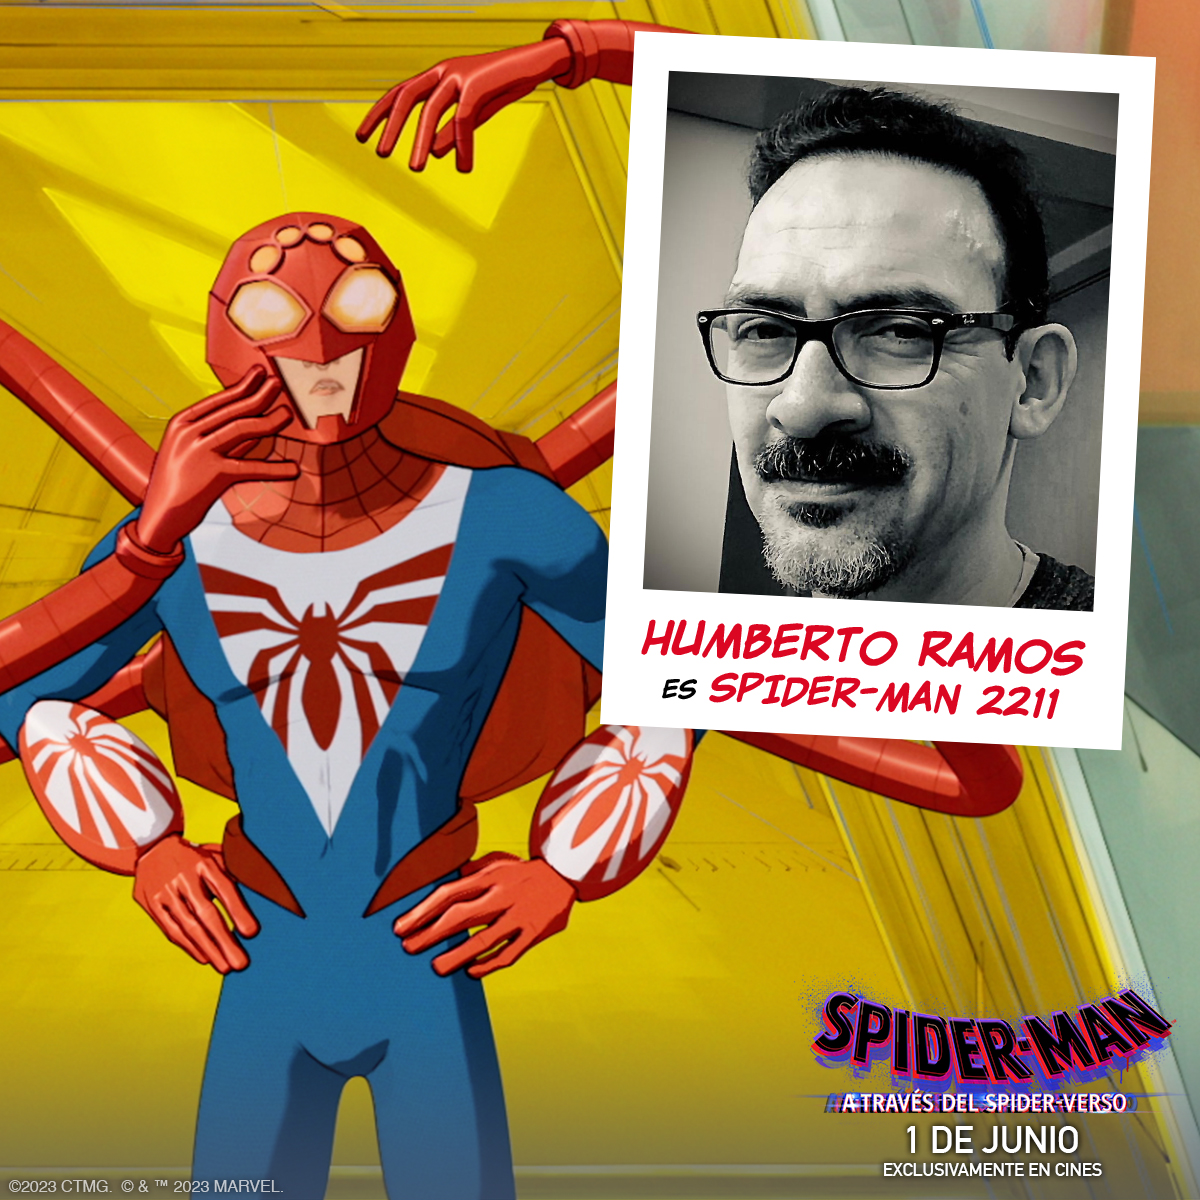 Humberto Ramos es Spider-Man 2211